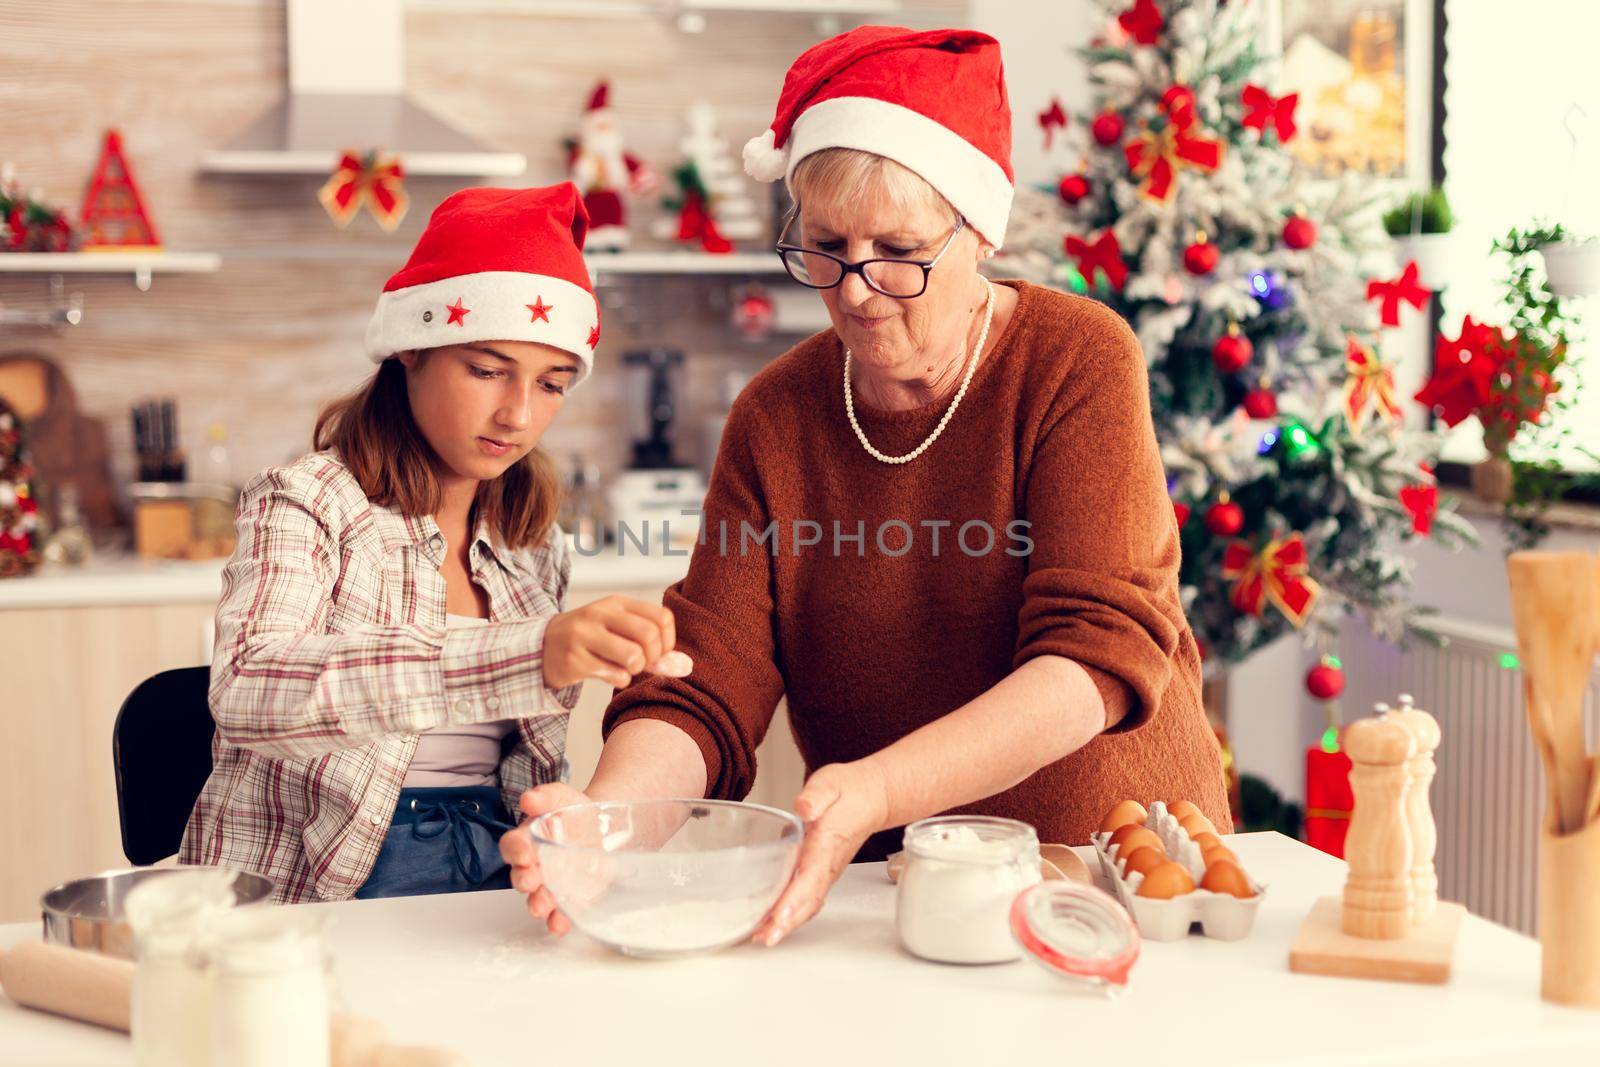 Loving grandmother on christmas day making cookies with niece. Happy cheerful joyfull teenage girl helping senior woman preparing sweet cookies to celebrate winter holidays wearing santa hat.